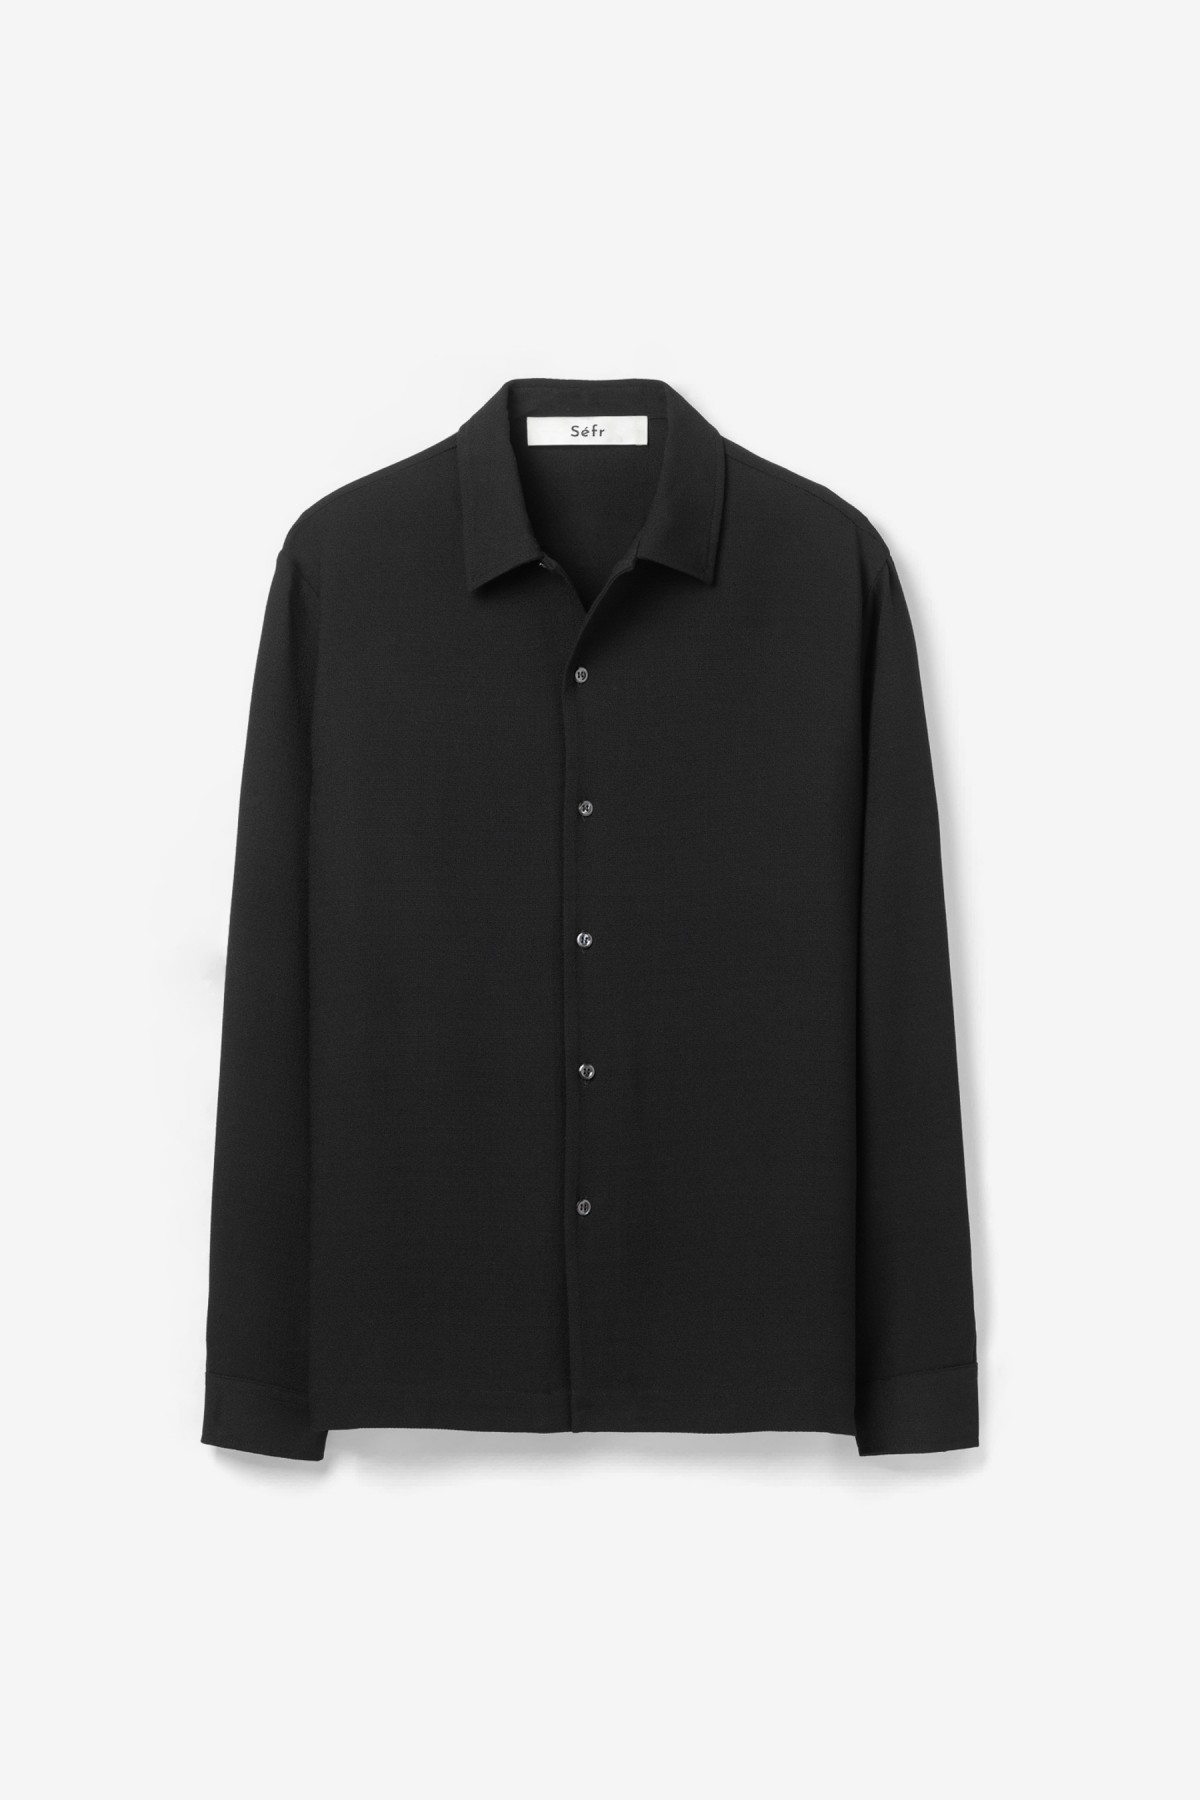 Séfr Rampoua Shirt in Black Crepe